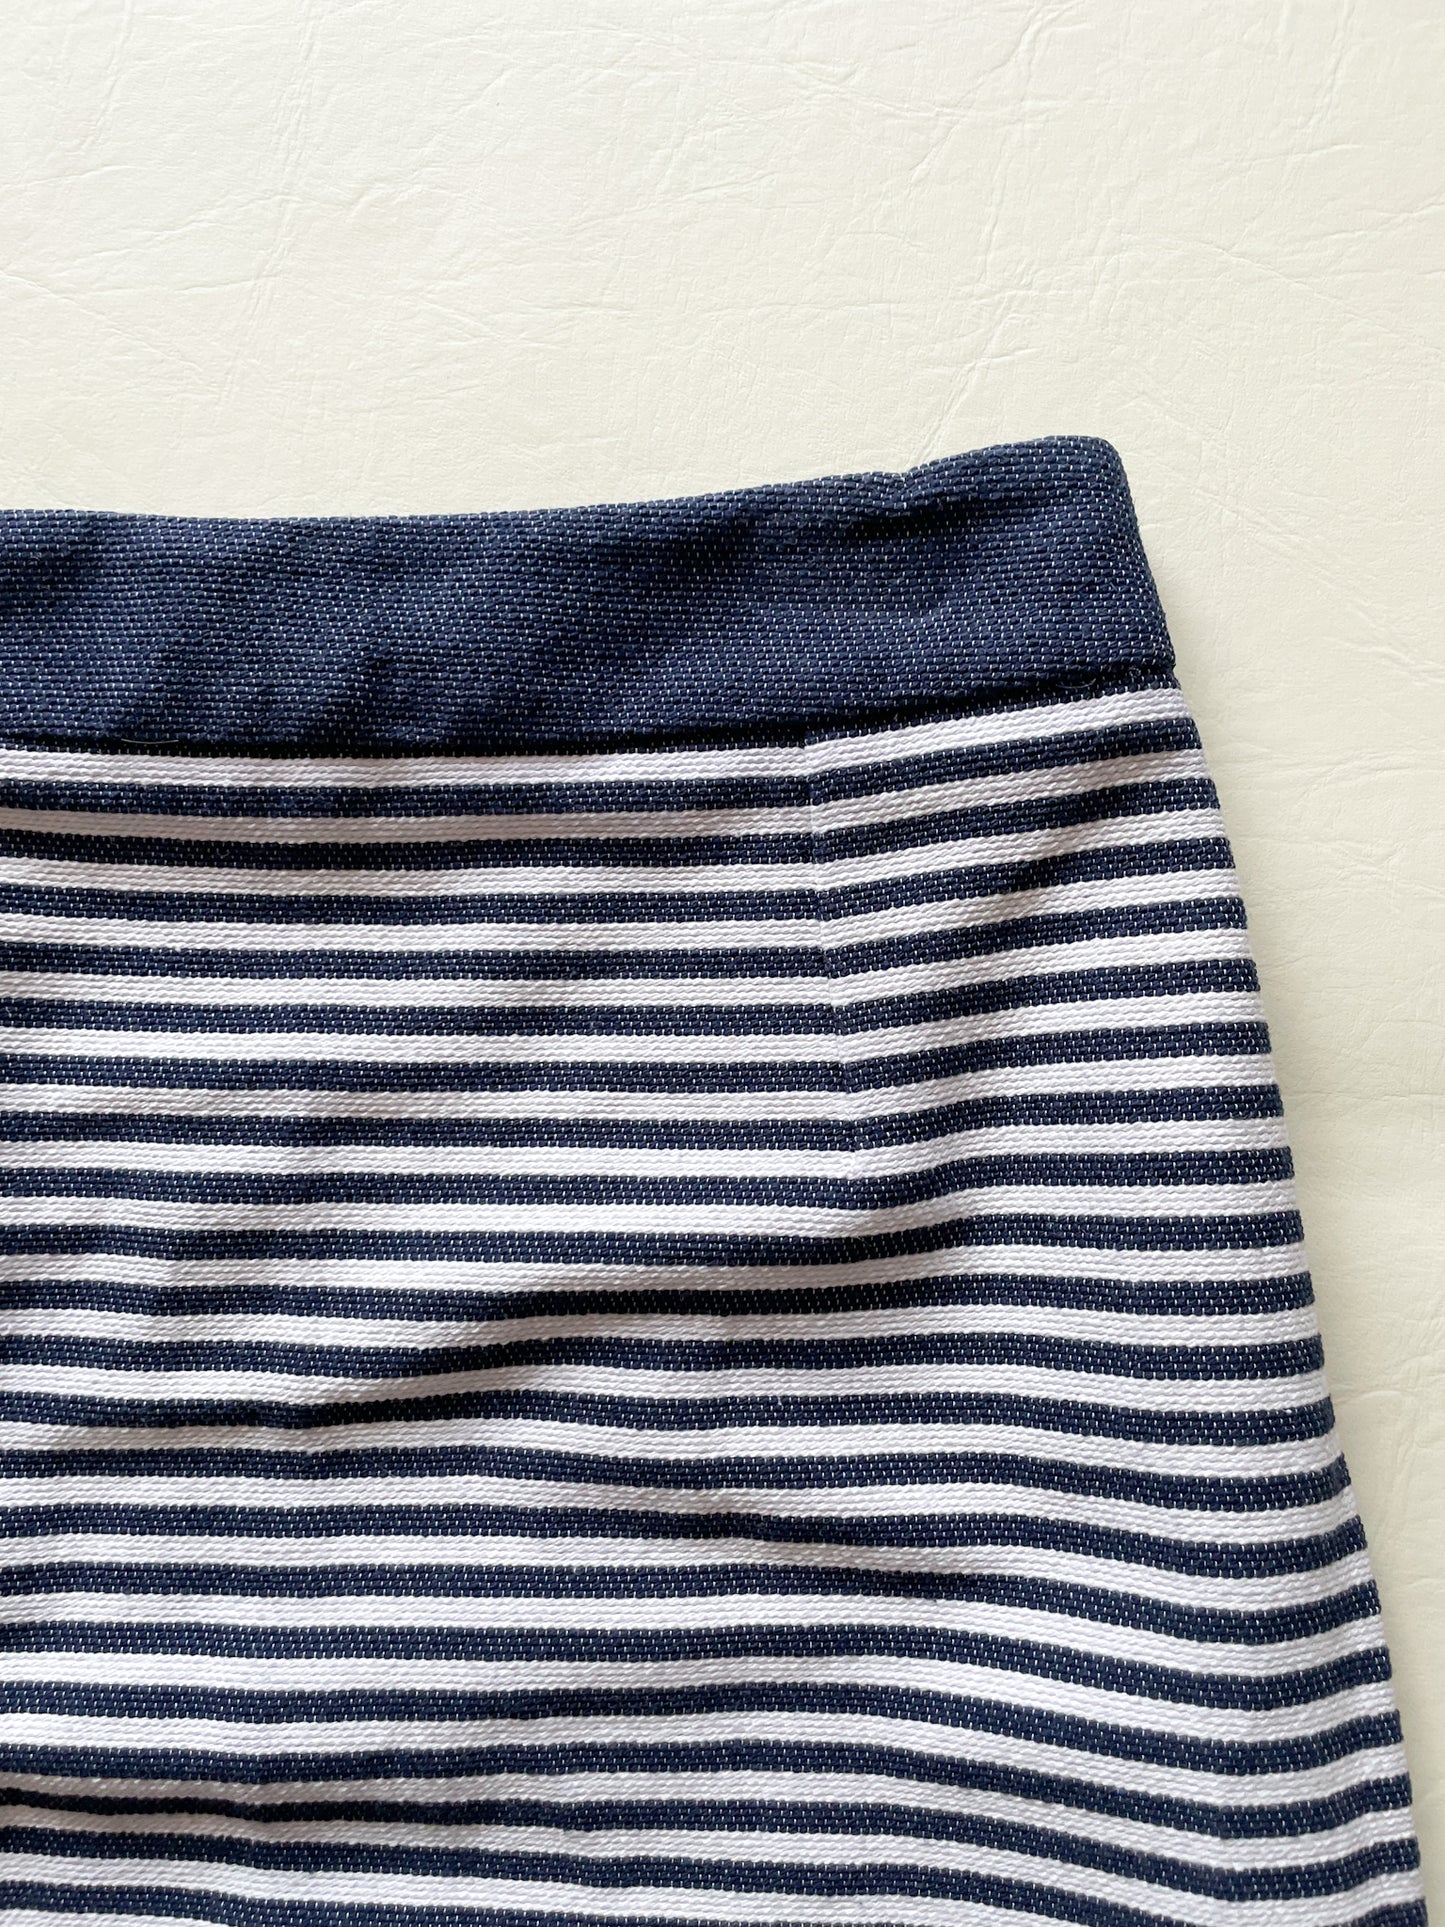 Jack Wills Navy White Stripe Cotton Blend Mini Skirt - Size 6